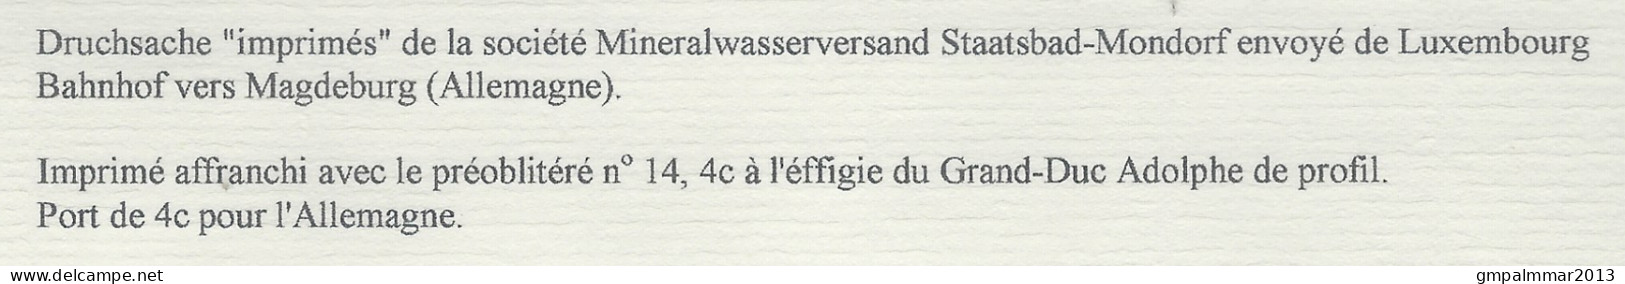 1905  LUXEMBOURG PREO Nr. 24 B  Sur Lettre à Magdeburg (ALLEMAGNE) (details & état Voir 3 Scans) ! RRRRR  LOT 314 - Voorafgestempeld